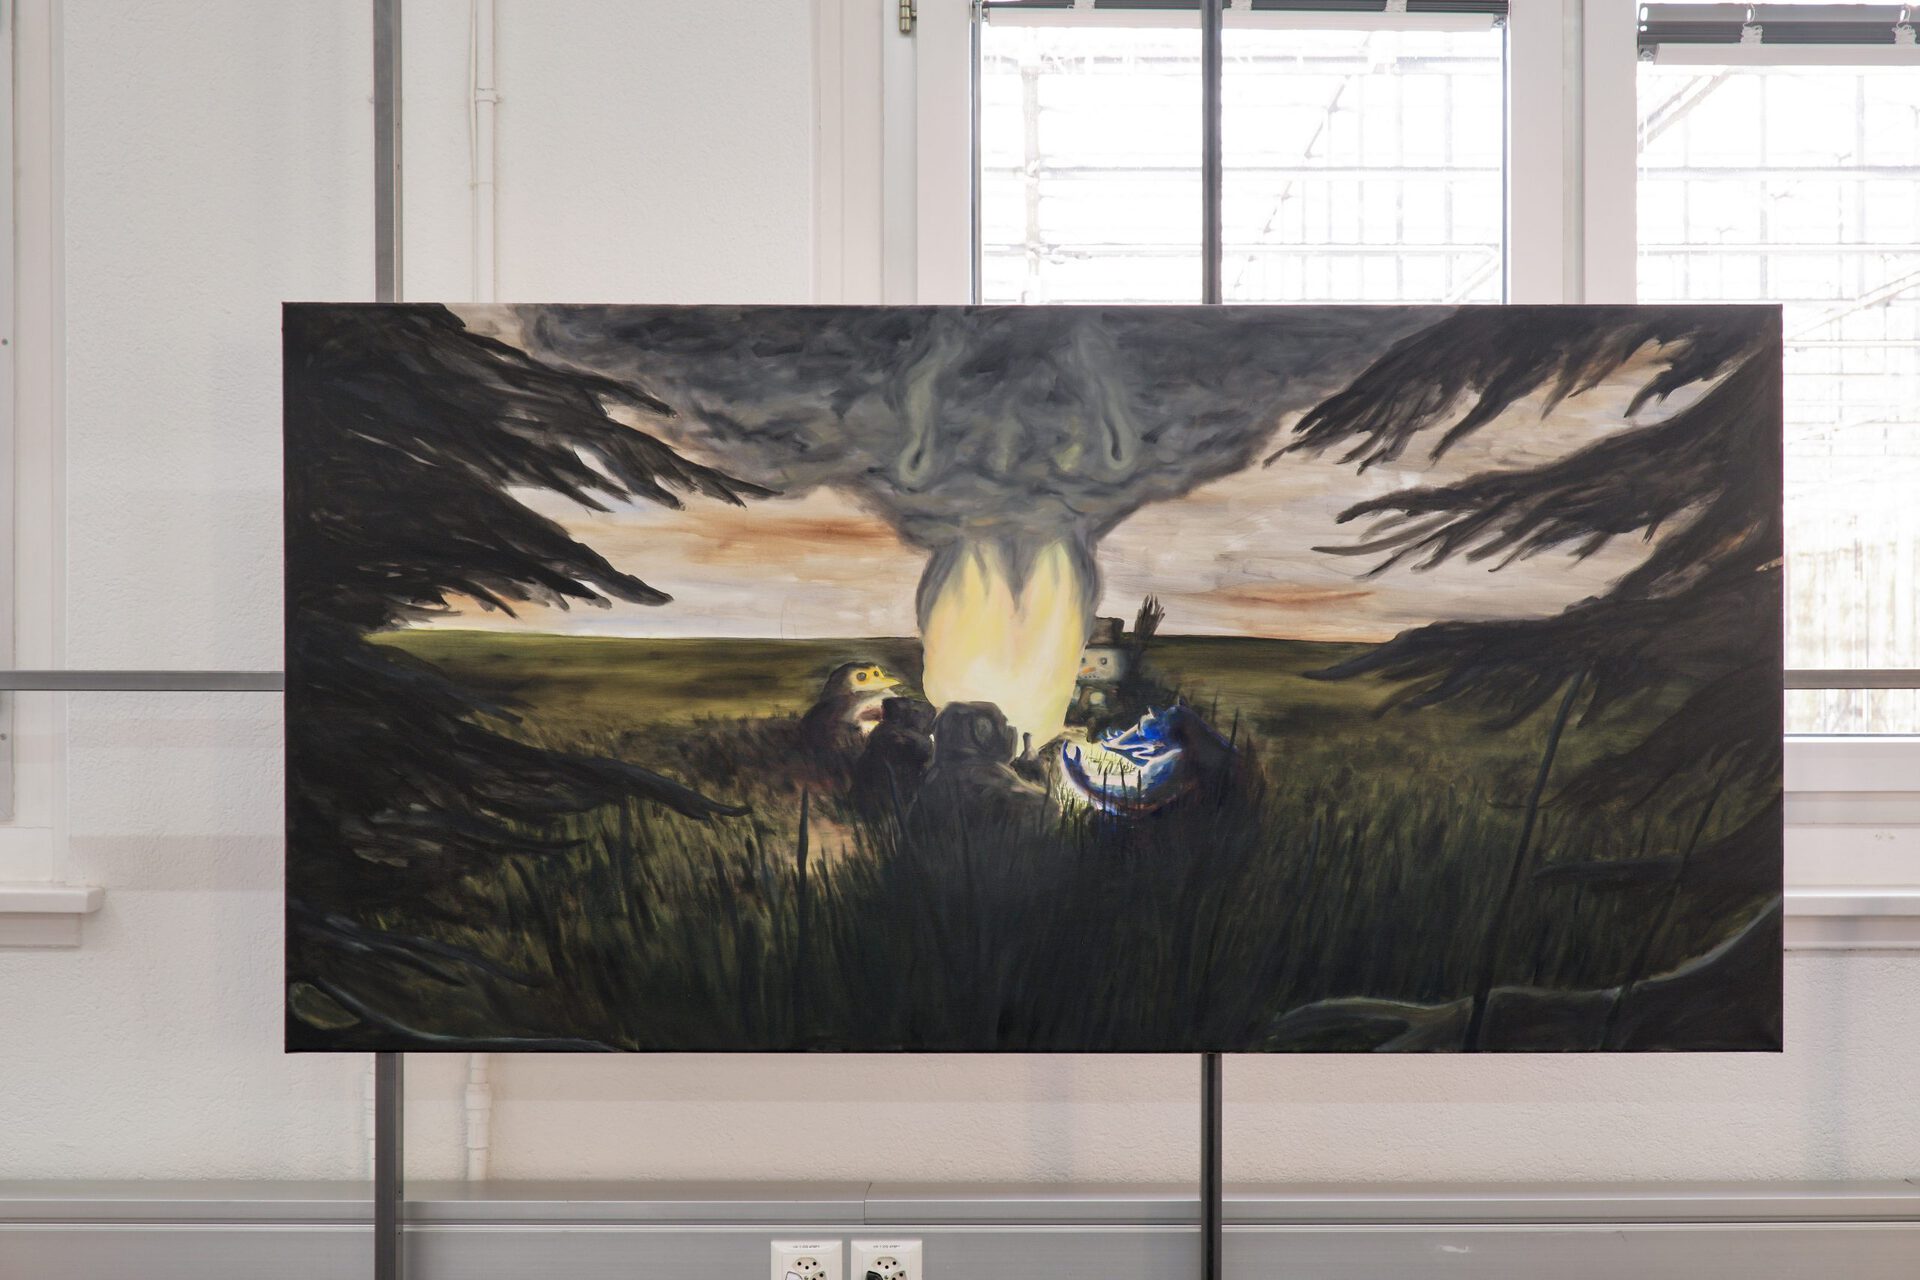 Kevin Aeschbacher, Spätsommerlicher Irrtum am Waldrand (lush evenings/feeling distant), 2022, oil on fabric, 90 x 180 cm